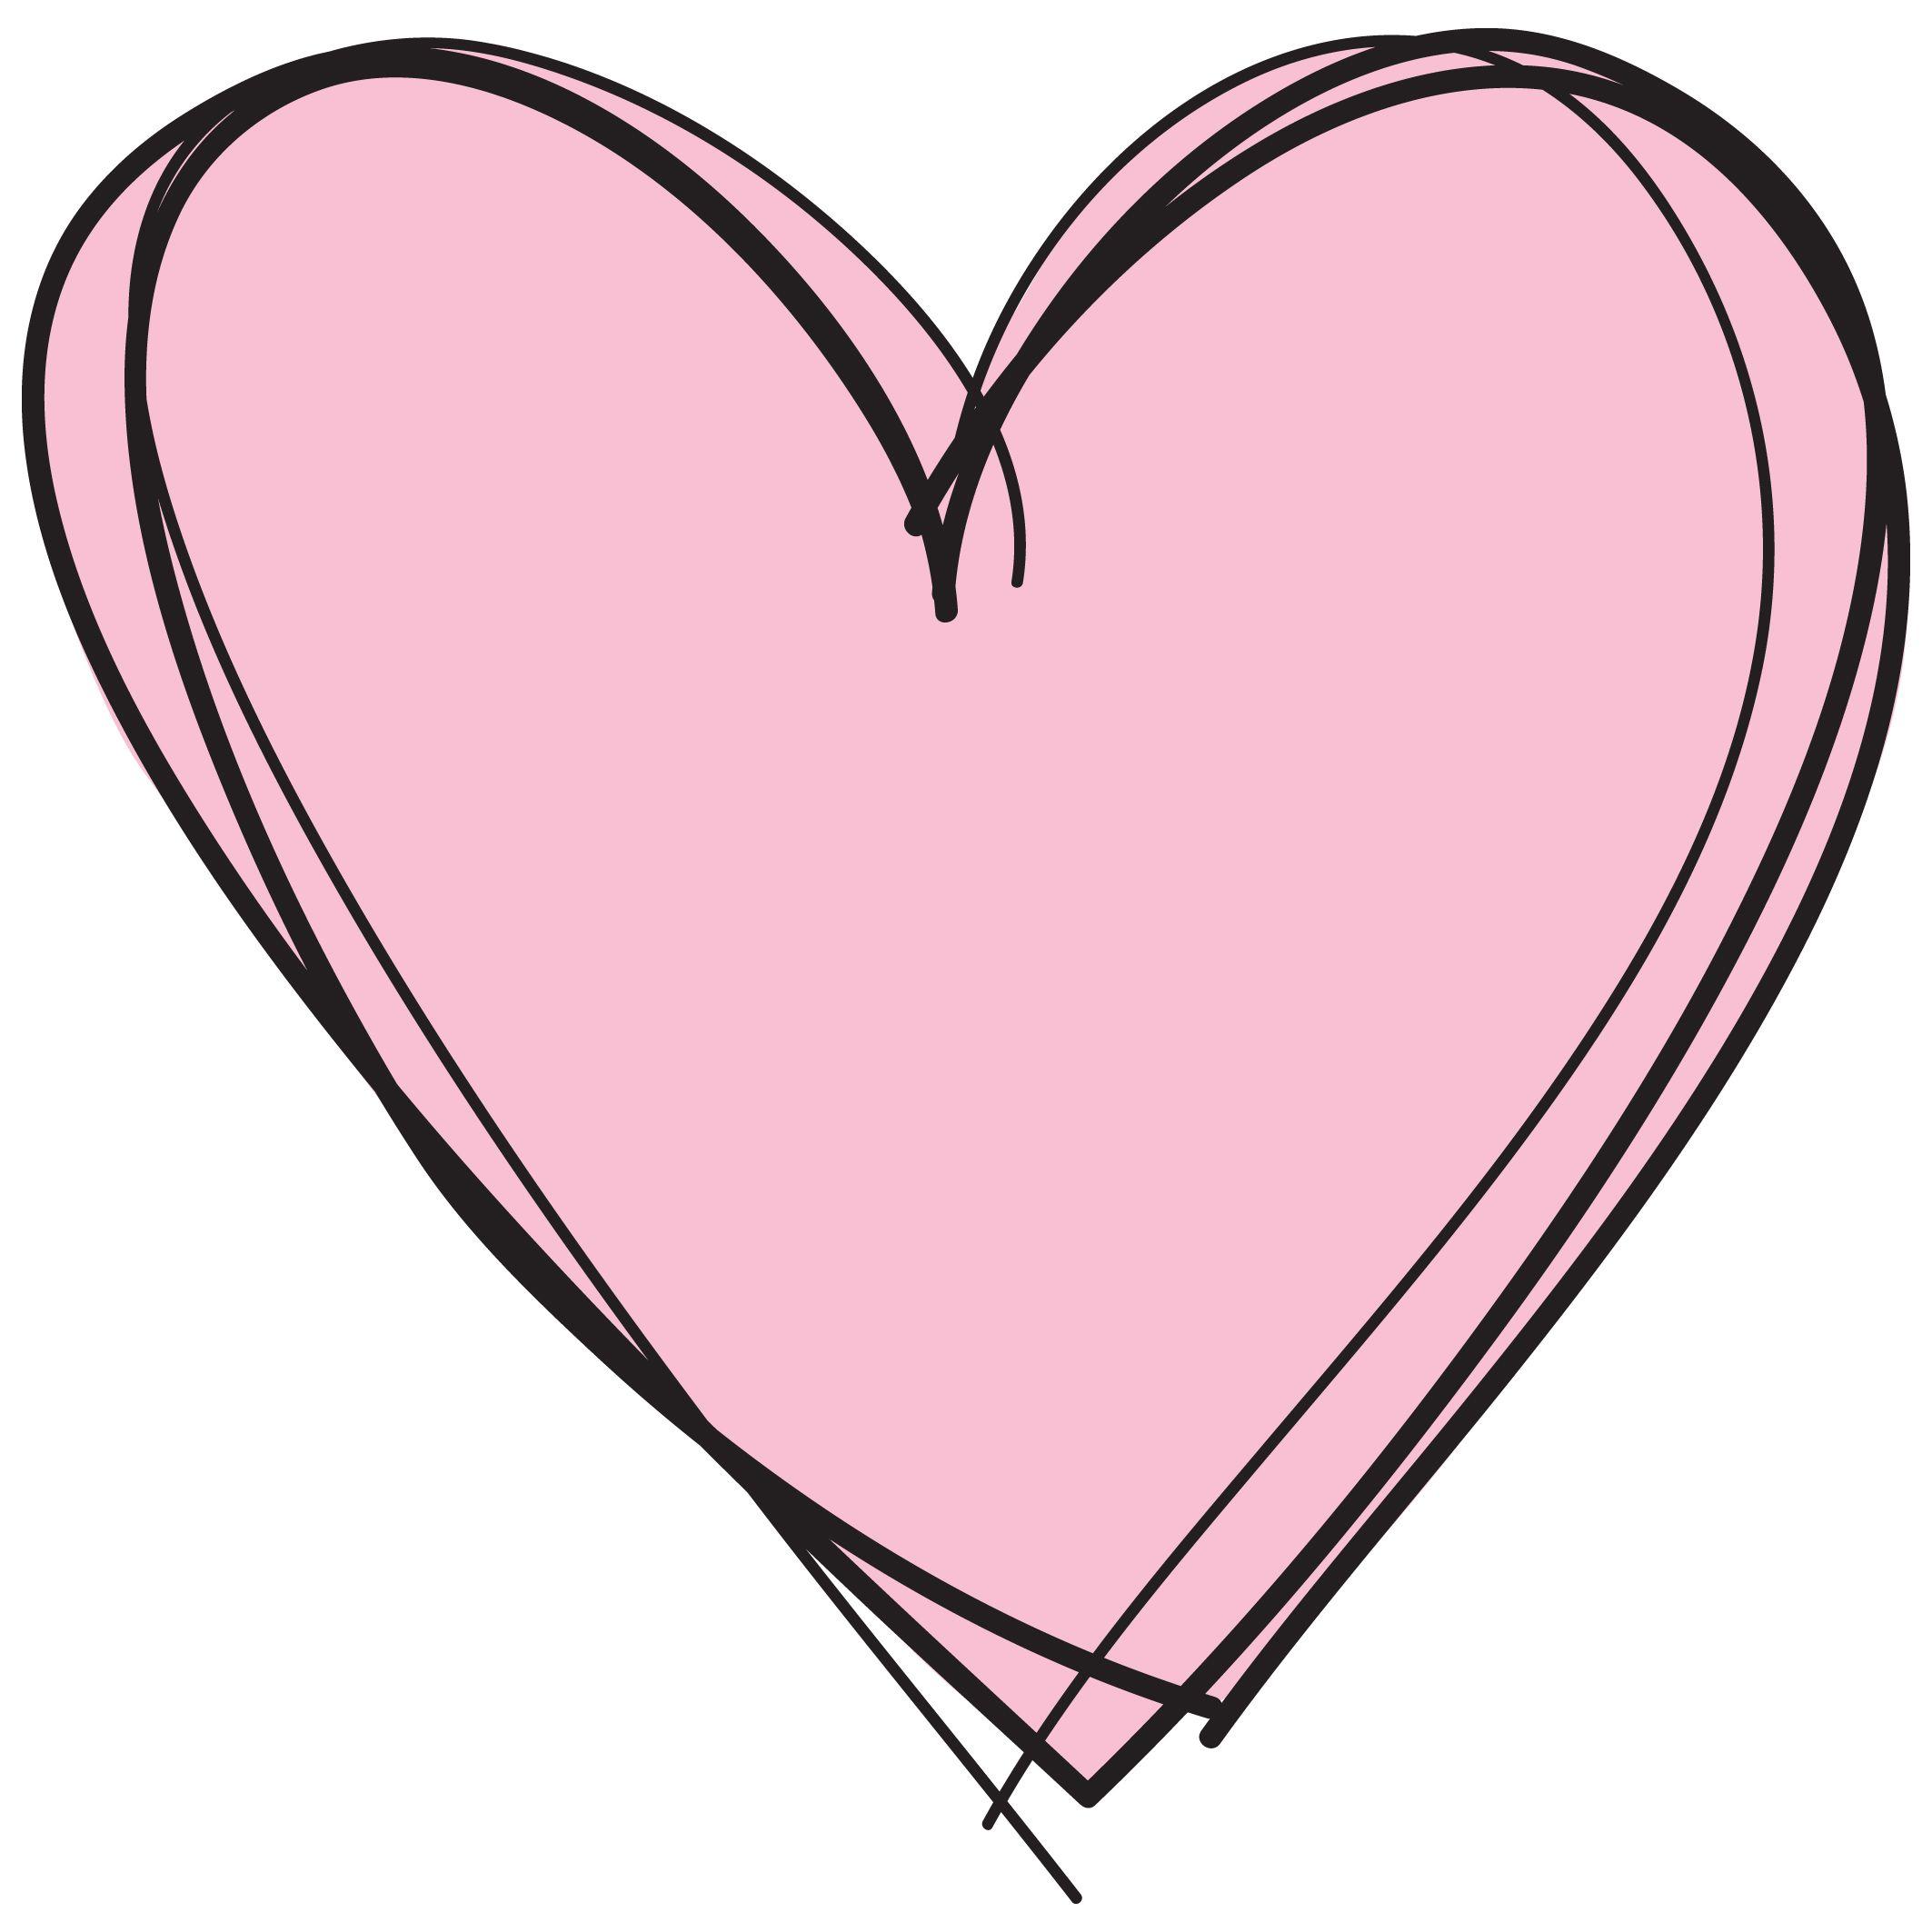 Pink Heart Logo - Free Pink Heart Image, Download Free Clip Art, Free Clip Art